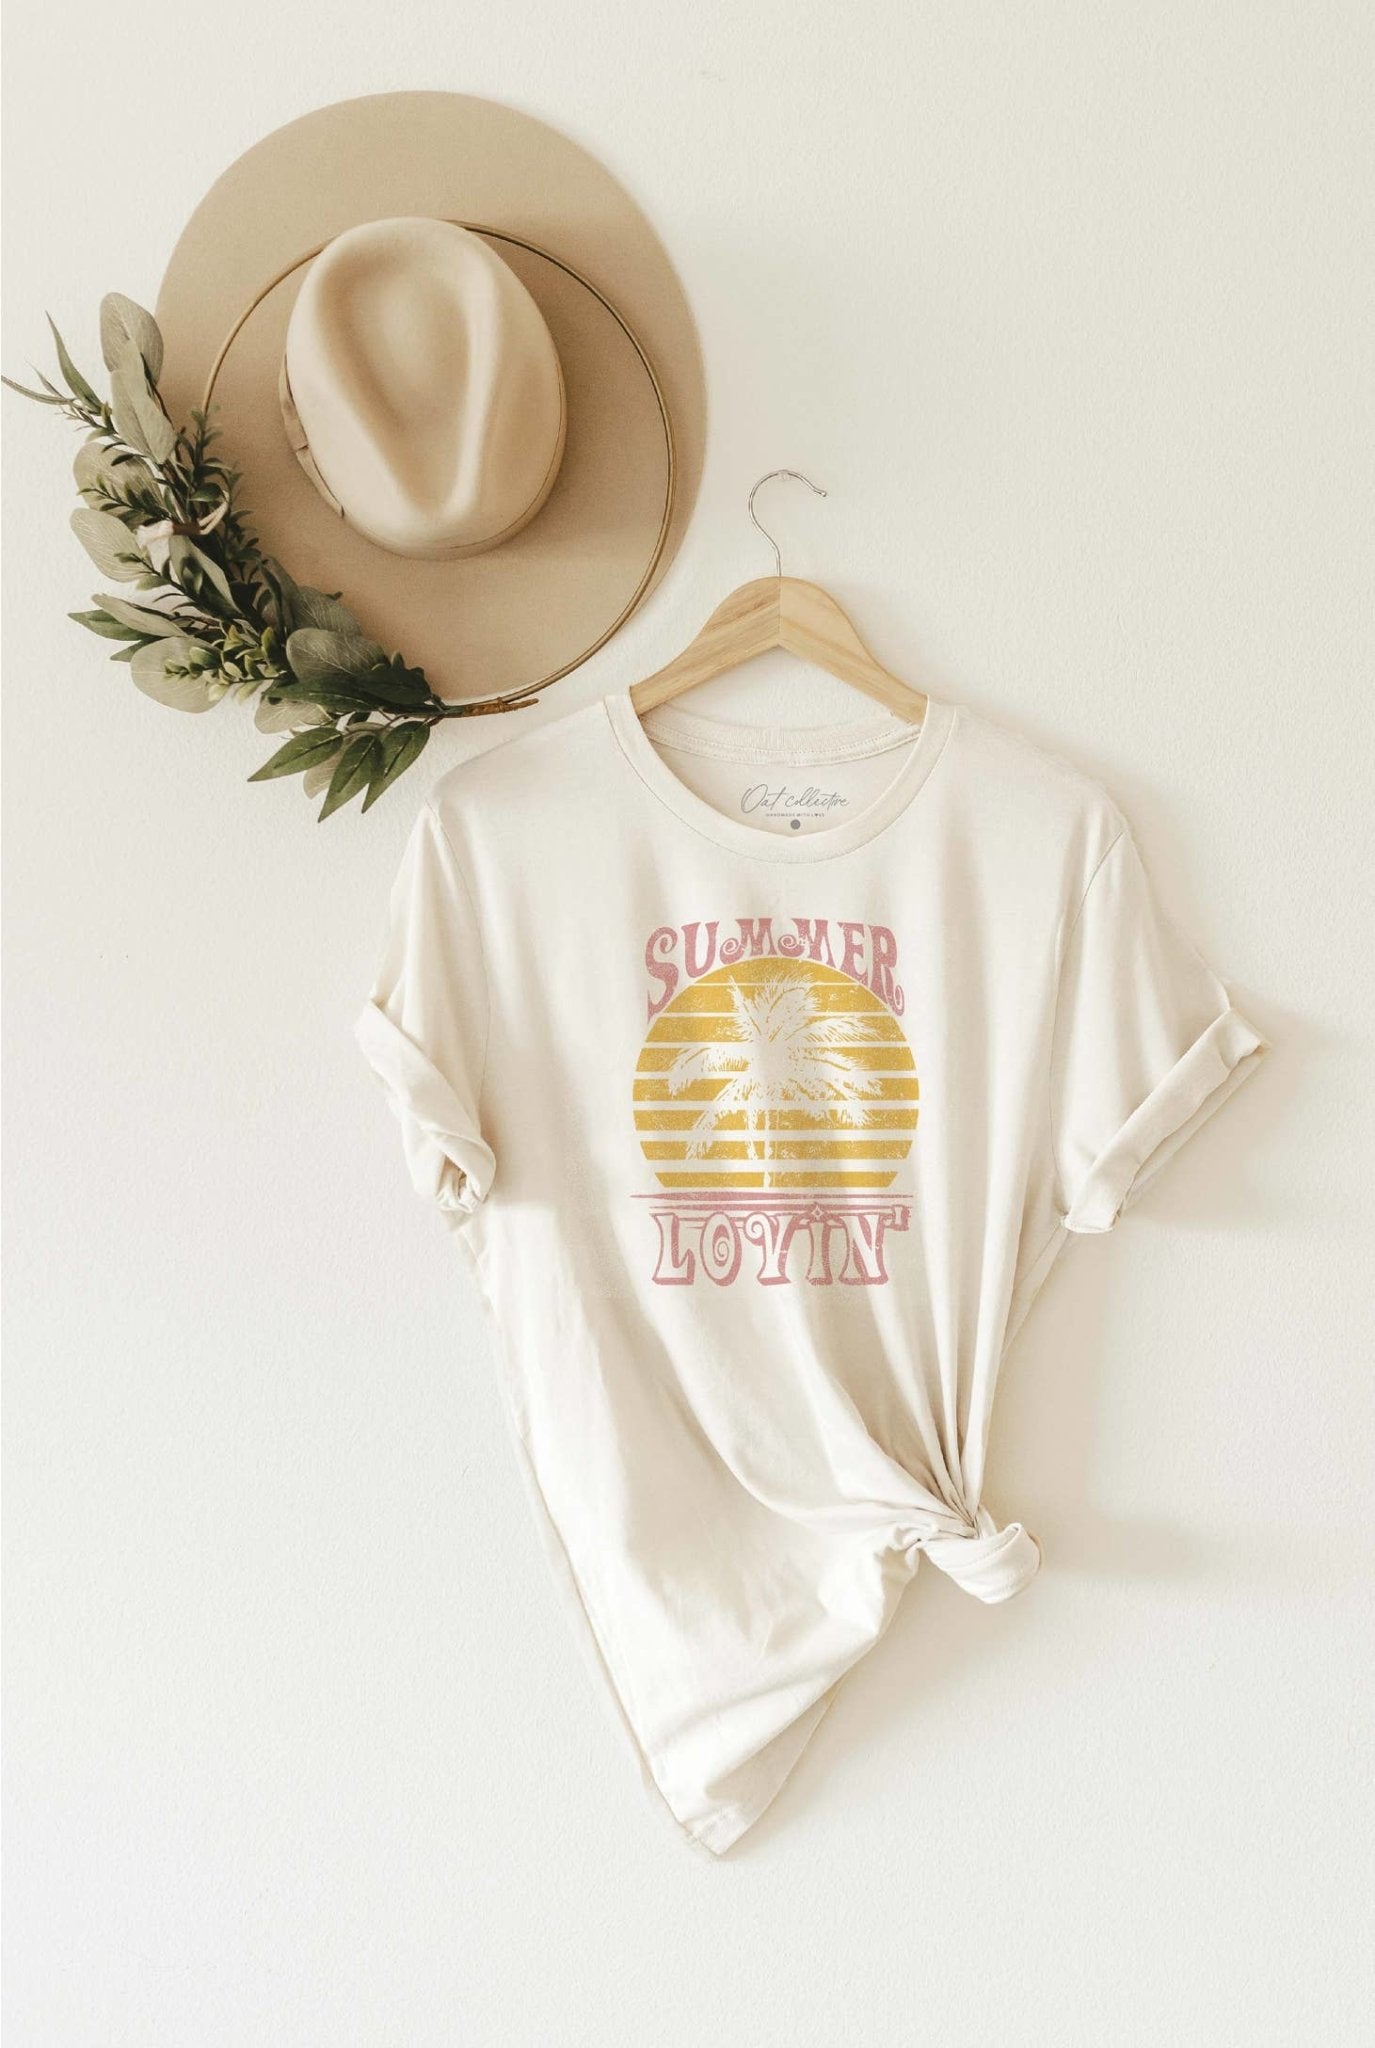 Summer Lovin' Graphic T-Shirt - The Riviera Towel Company